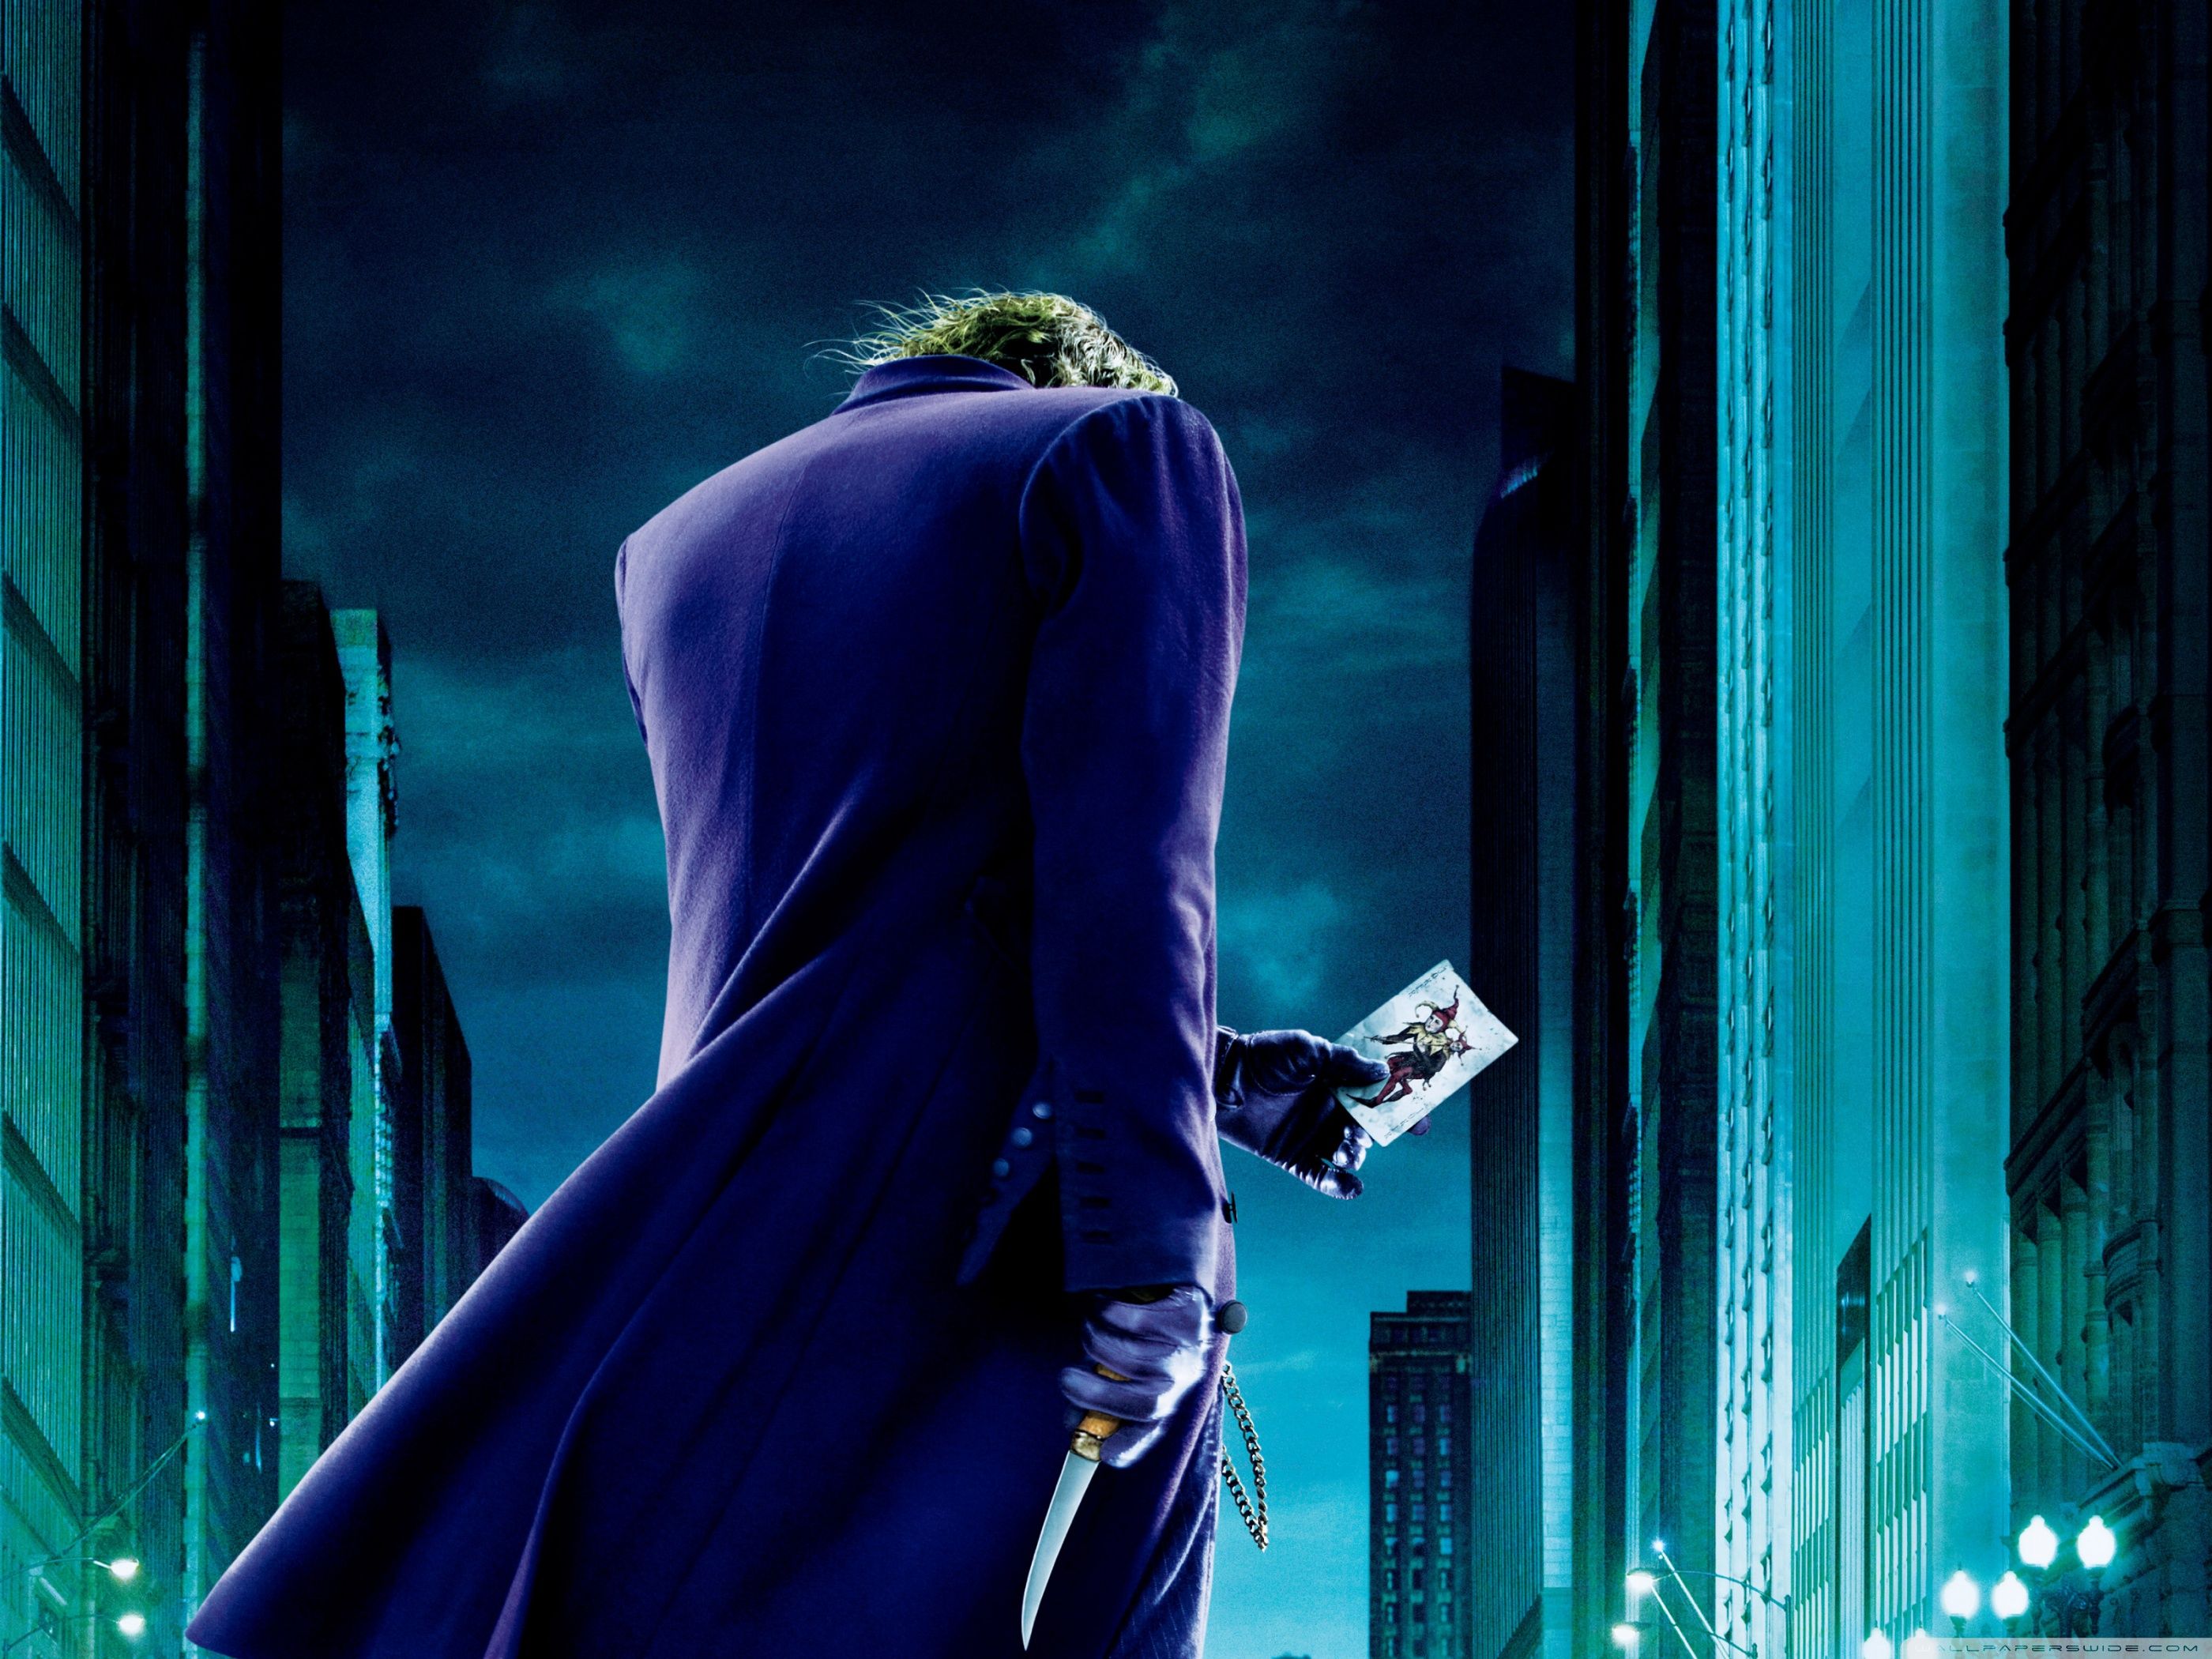 The Joker The Dark Knight Ultra HD Desktop Background Wallpaper for 4K UHD TV, Tablet